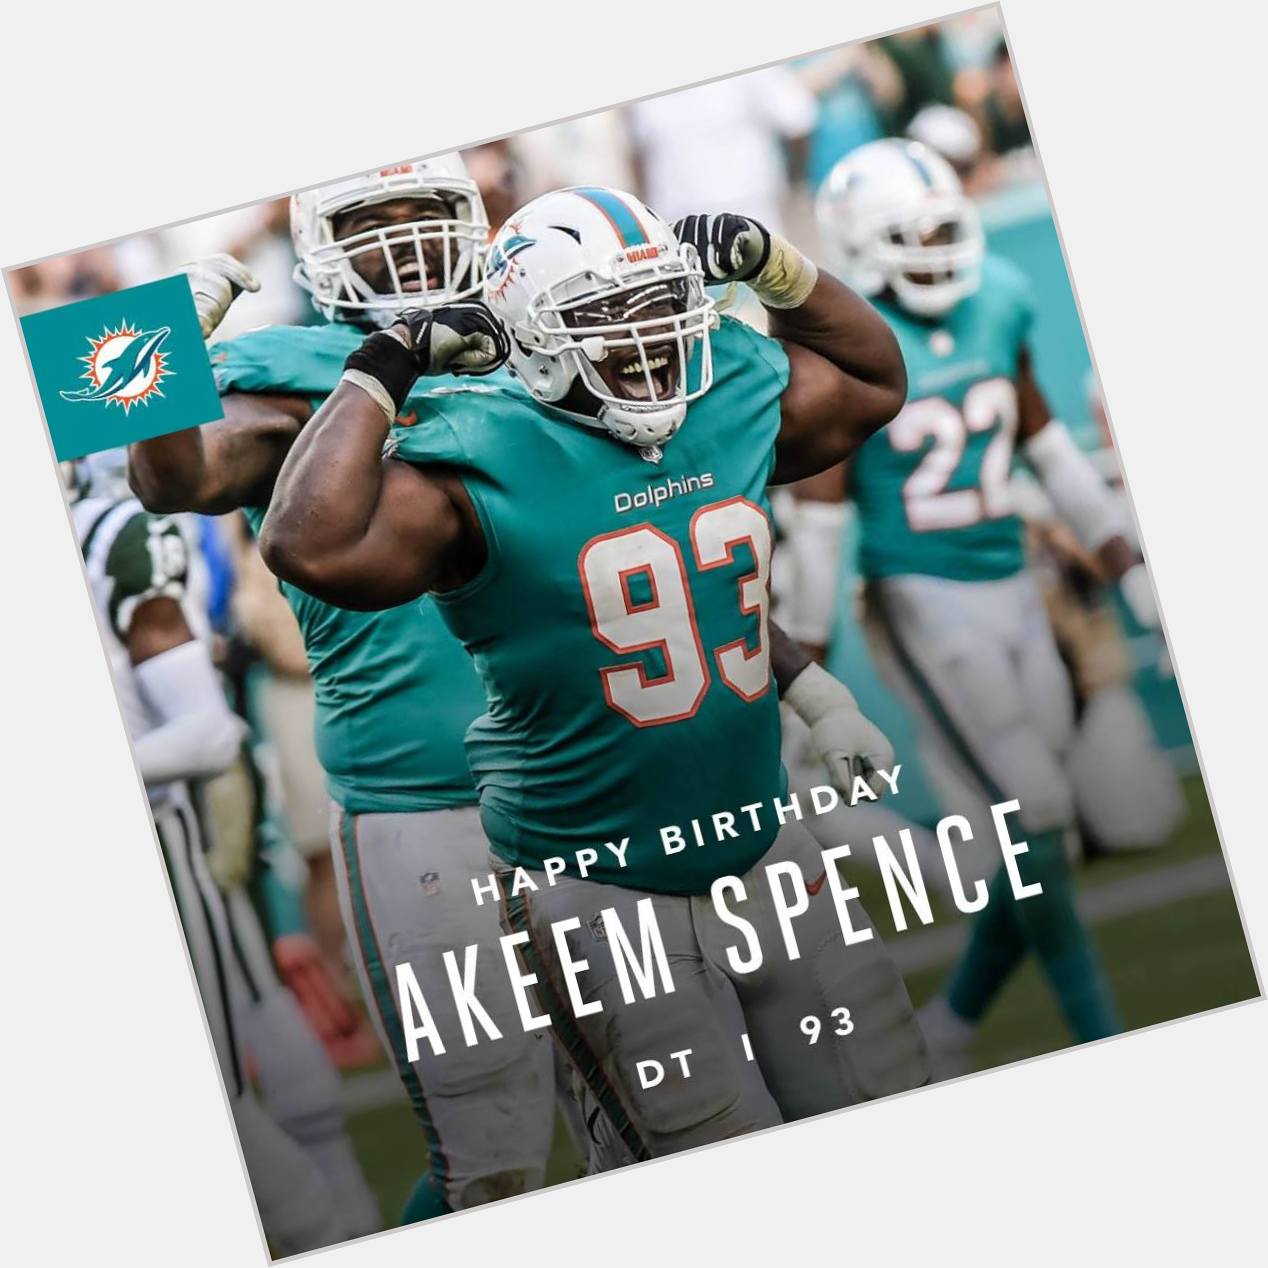 Happy Birthday, Akeem Spence!  